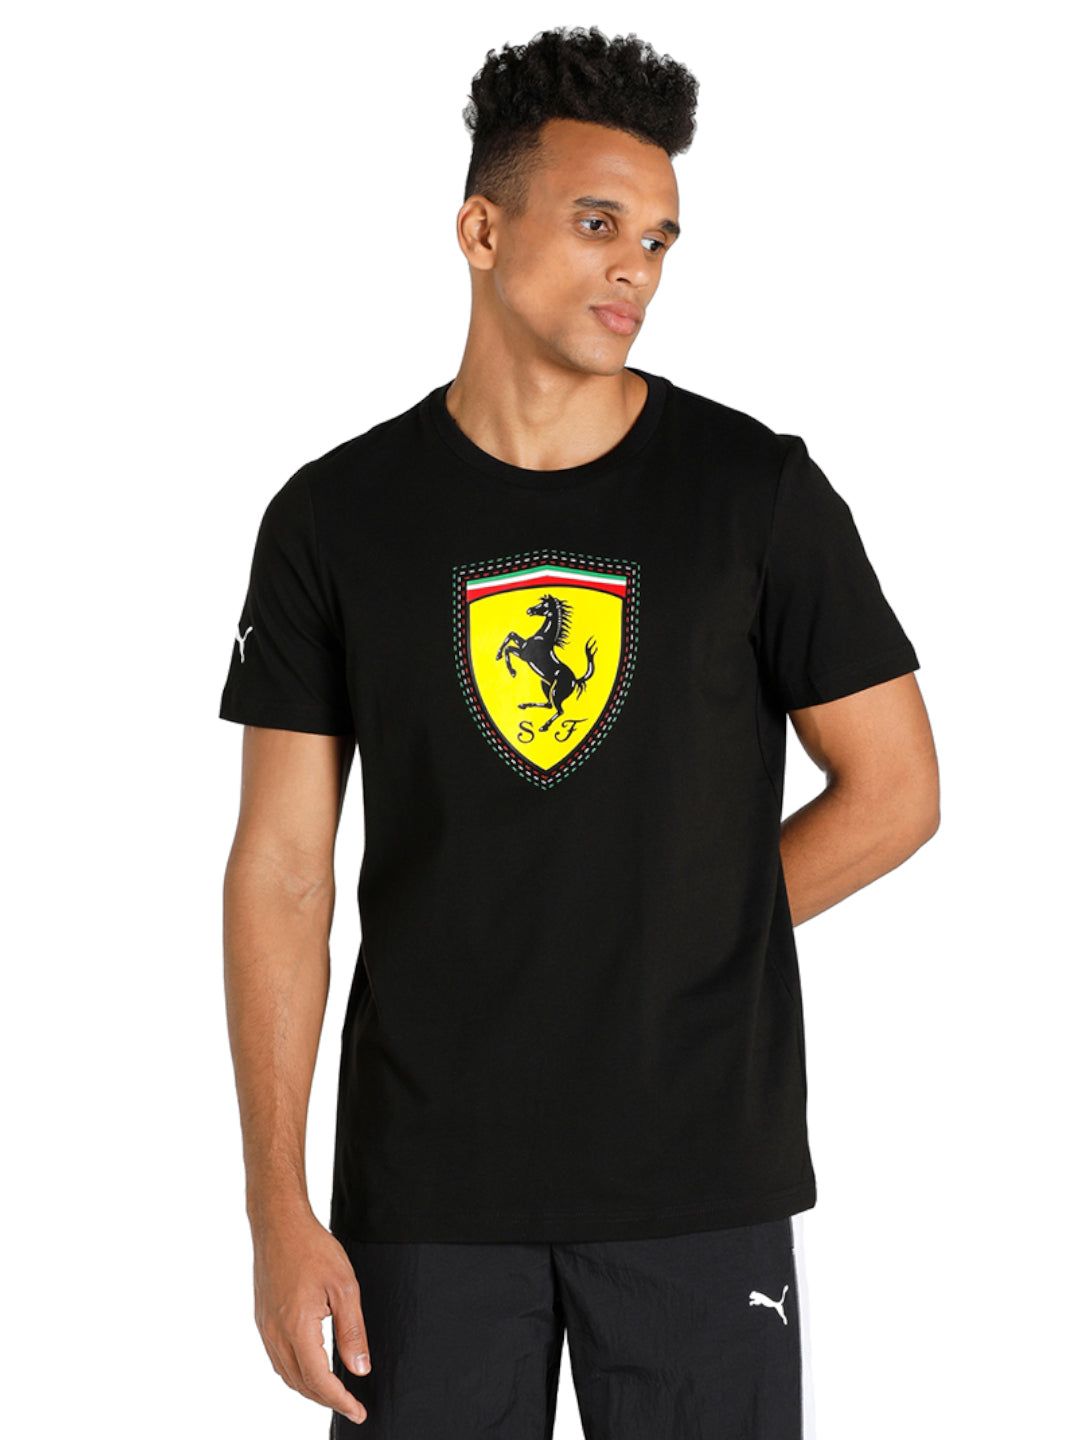 Buy Ferrari Race Colored Big Shield Tee from Fancode Shop